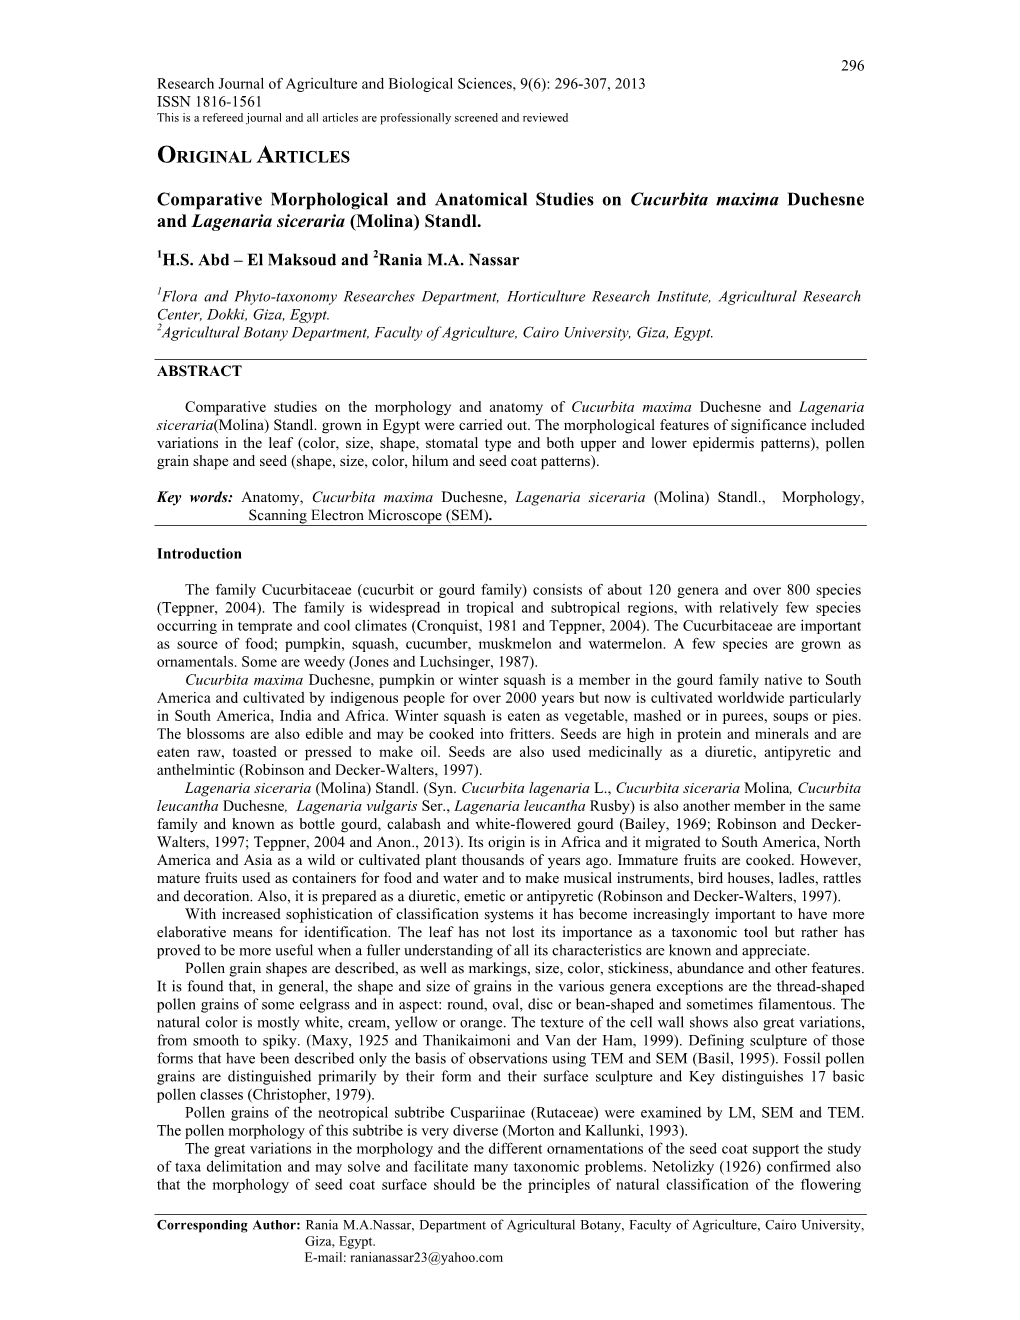 Comparative Morphological and Anatomical Studies on Cucurbita Maxima Duchesne and Lagenaria Siceraria (Molina) Standl